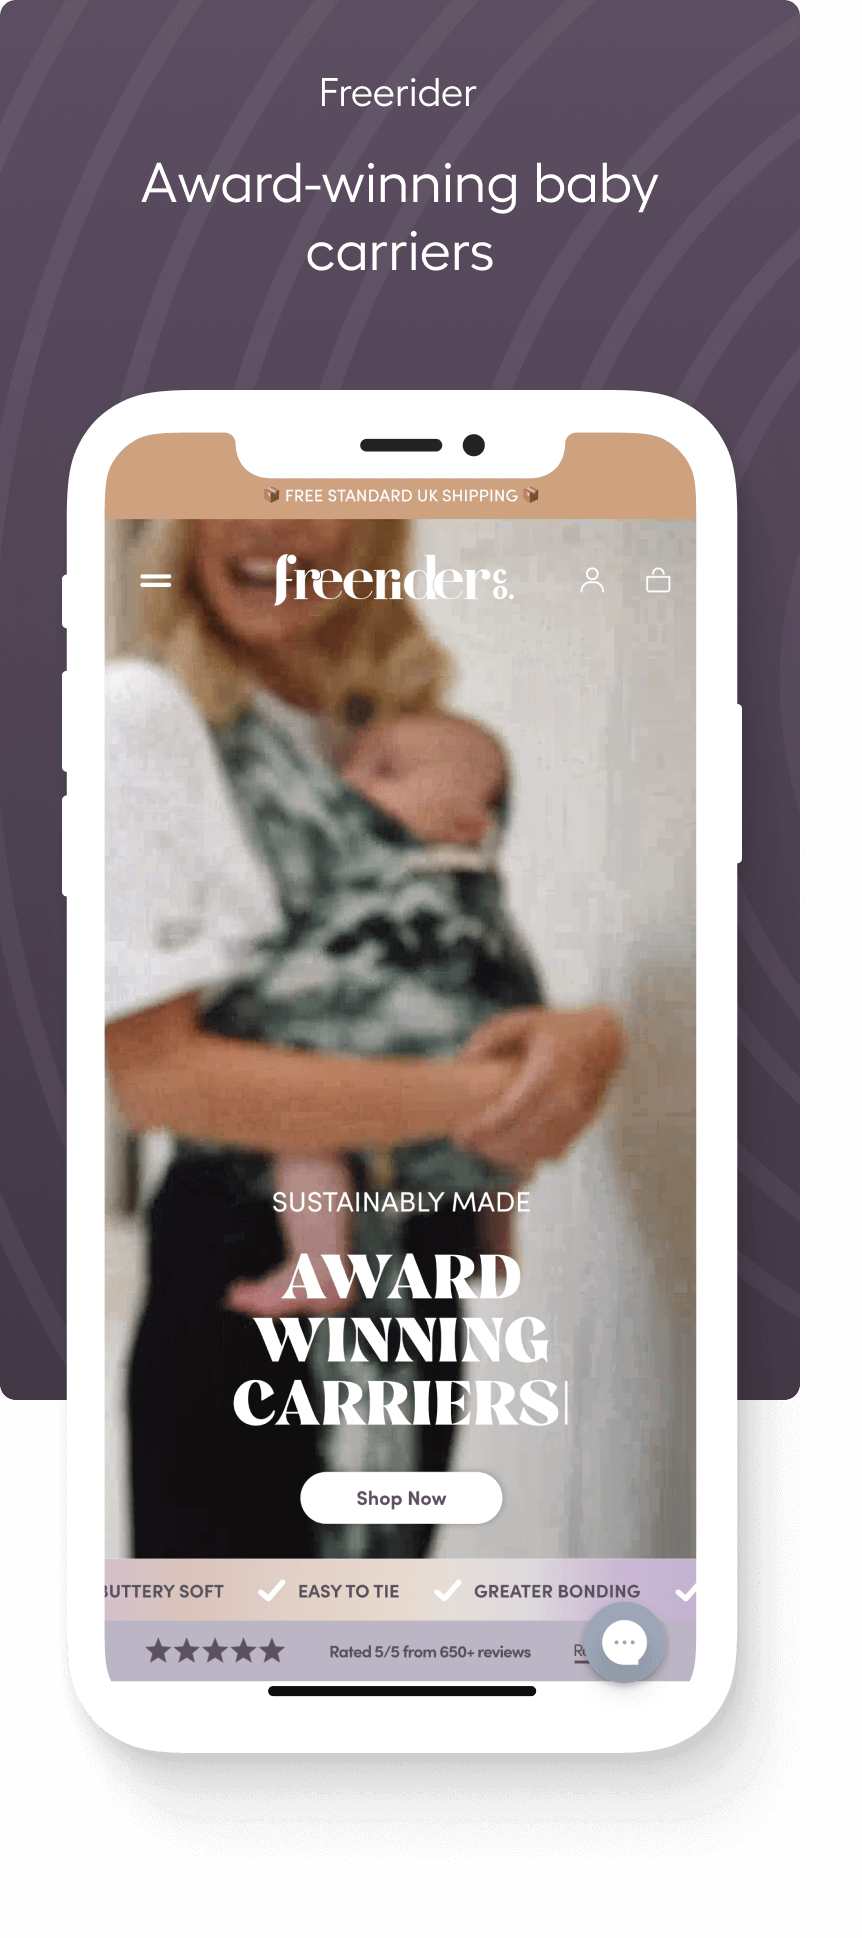 Award-winning baby carriers